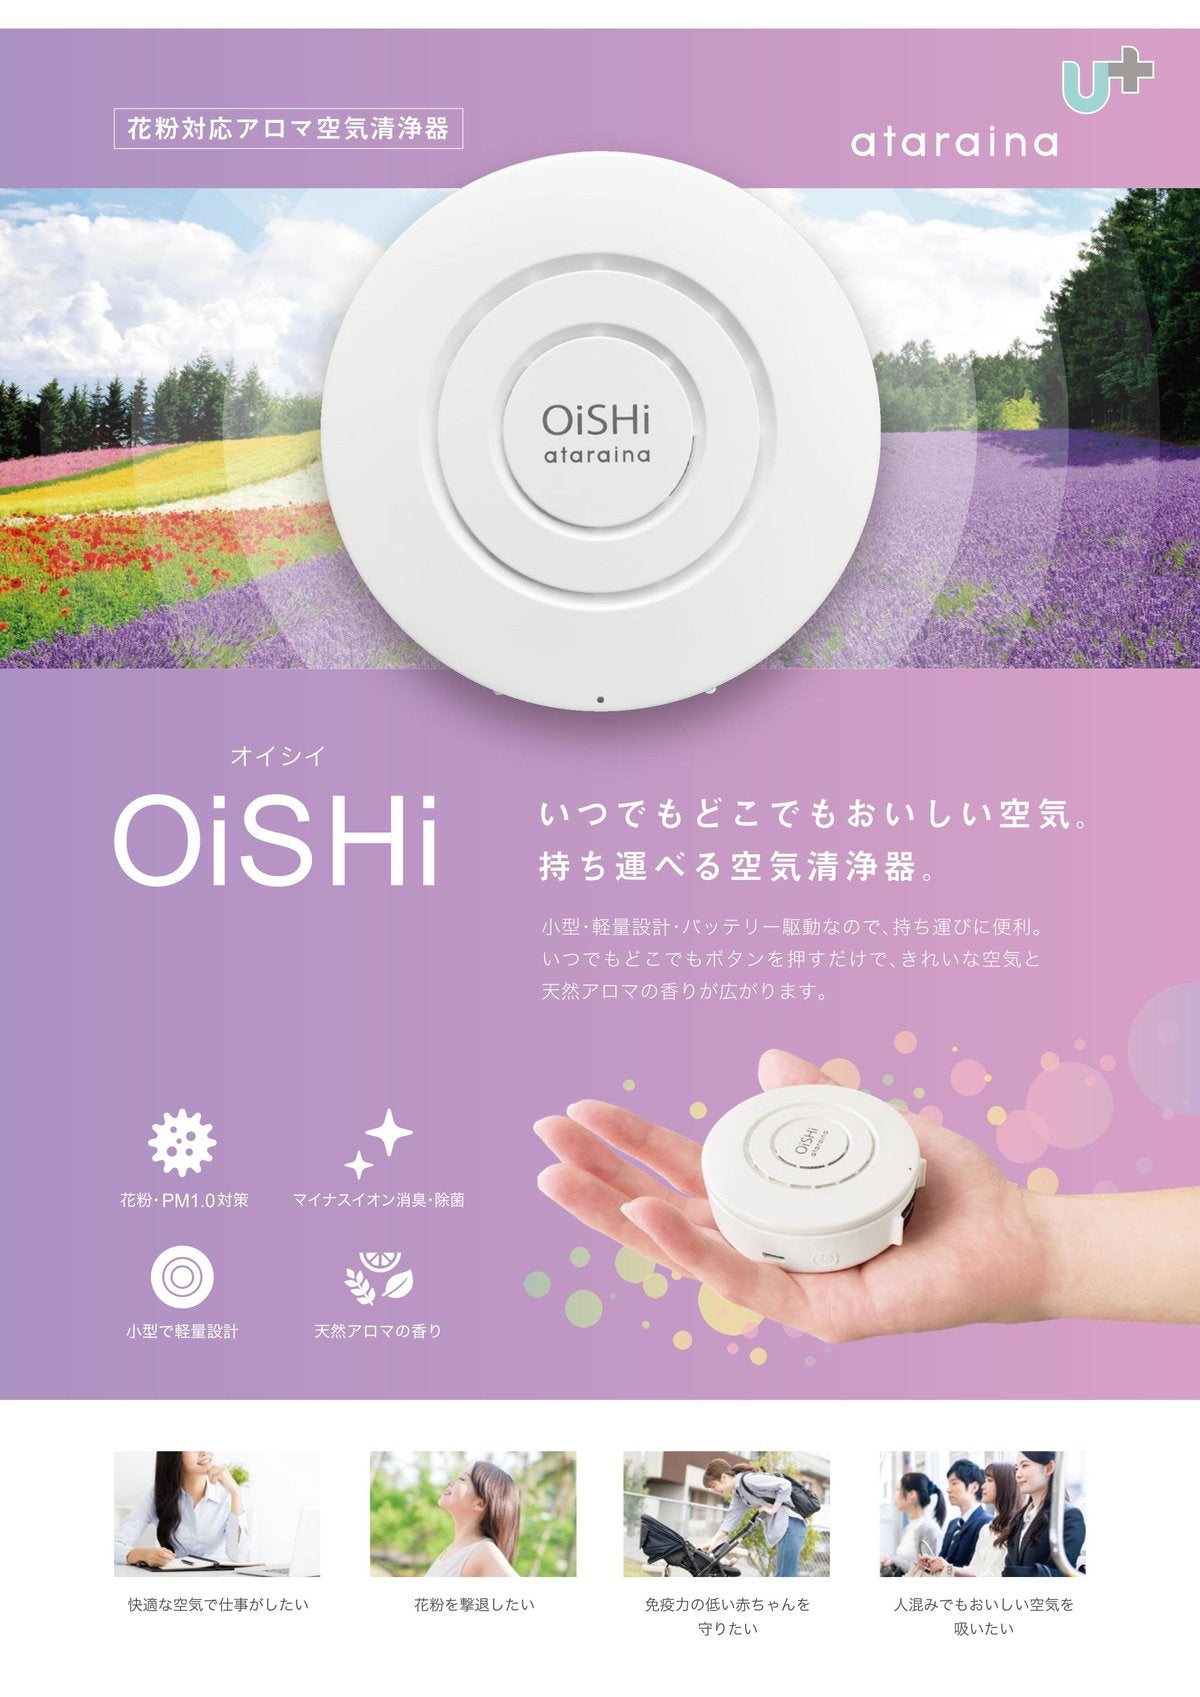 Ataraina - OiSHi Portable Air Purifier + Aroma Diffuser - Blue